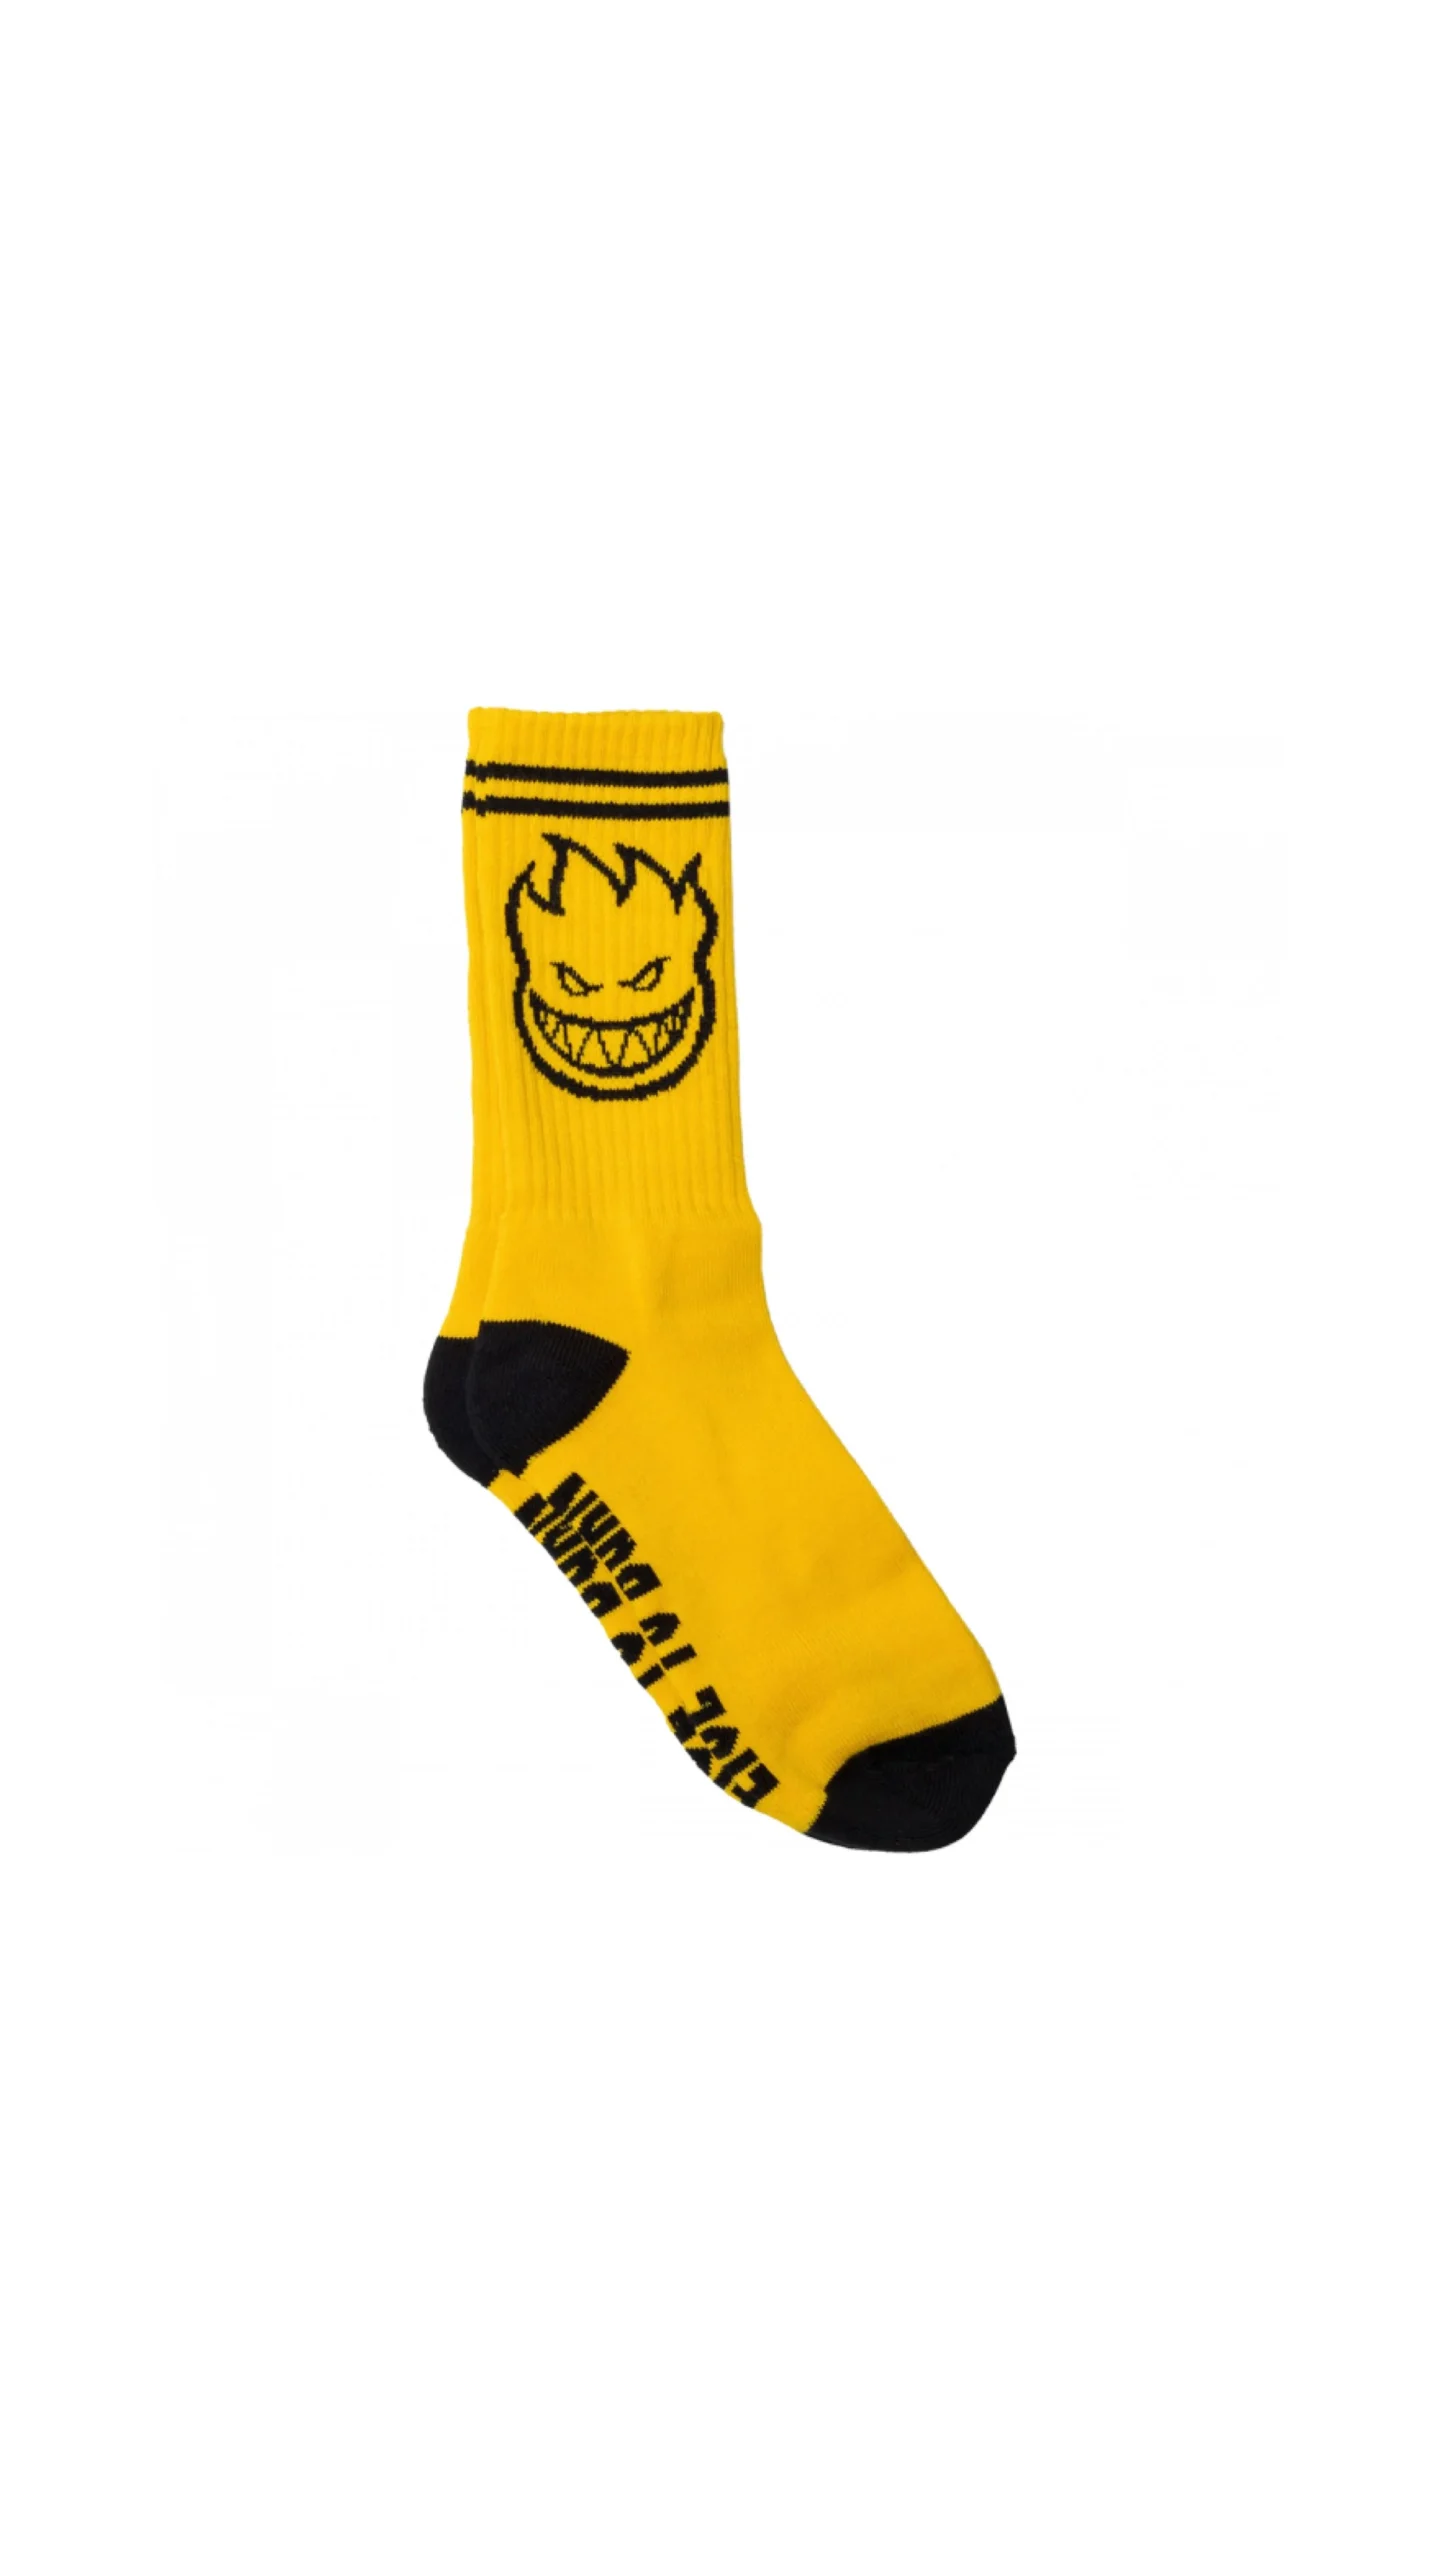 Spitfire socks yellow